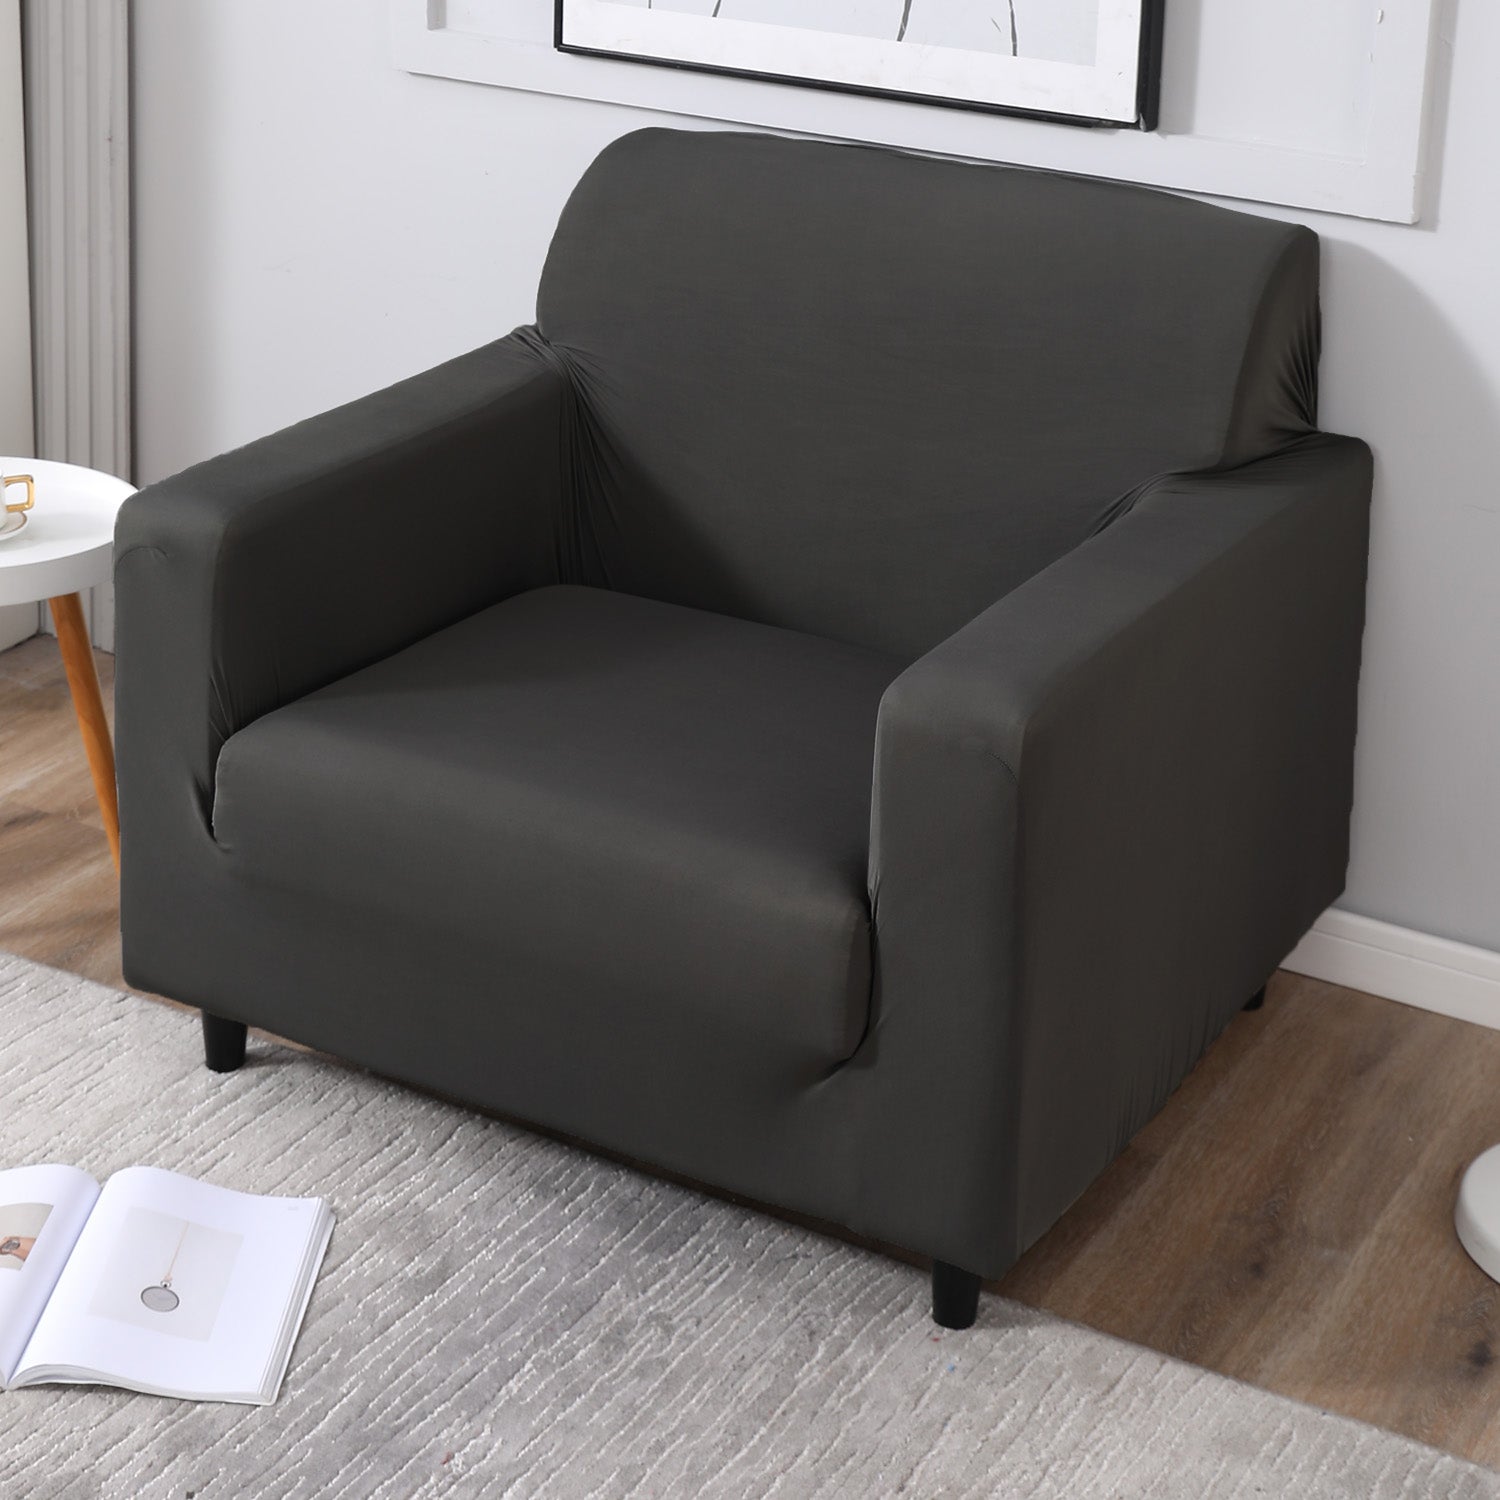 Elastic Stretchable Sofa Cover, Dark grey